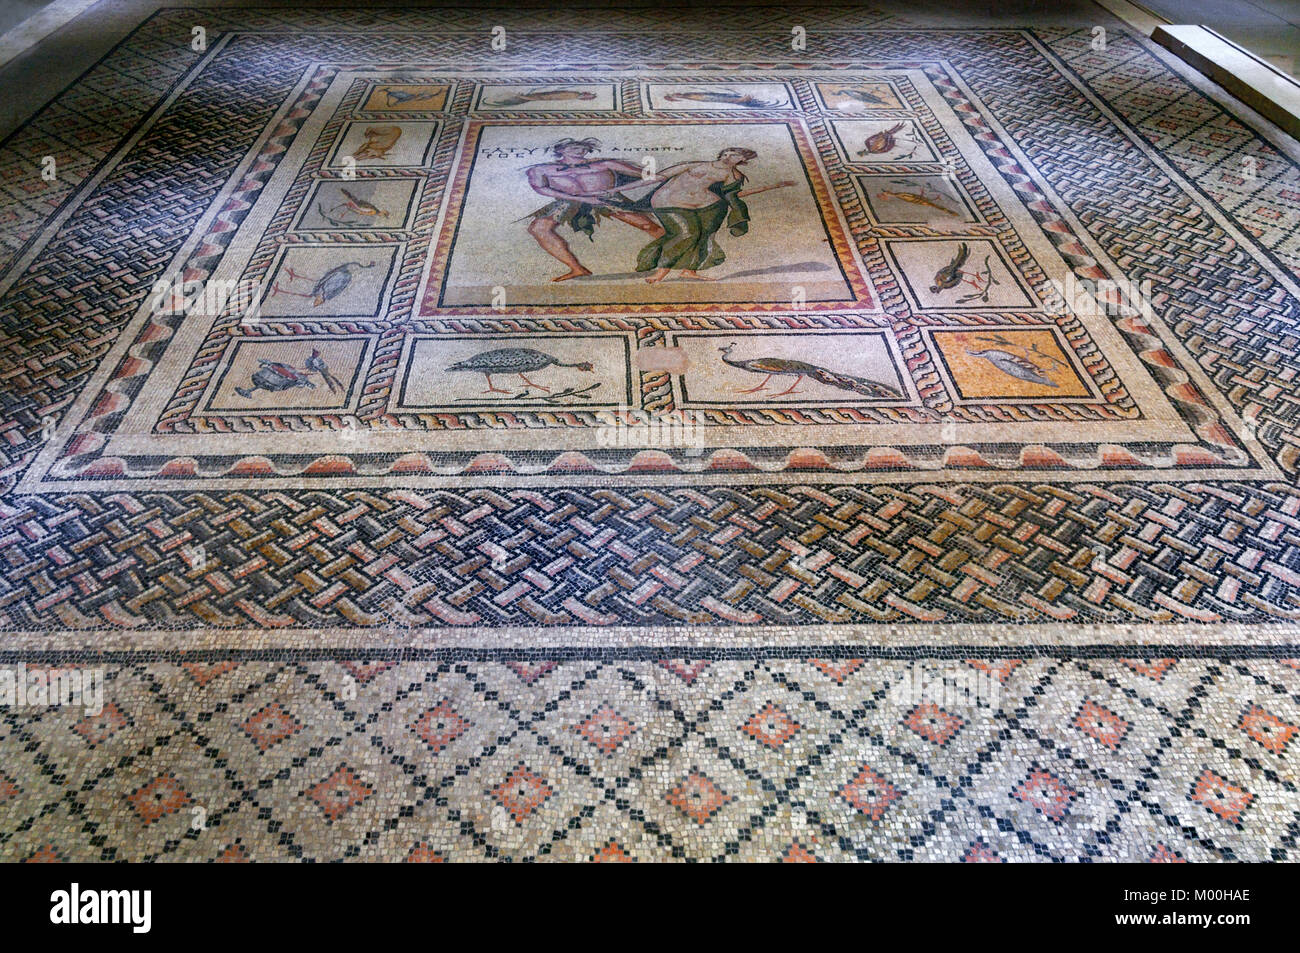 Floor mosaic from Zeugma, Gaziantep Zeugma Mosaic Museum, Gaziantep, Southeastern Anatolia Region of Turkey Stock Photo